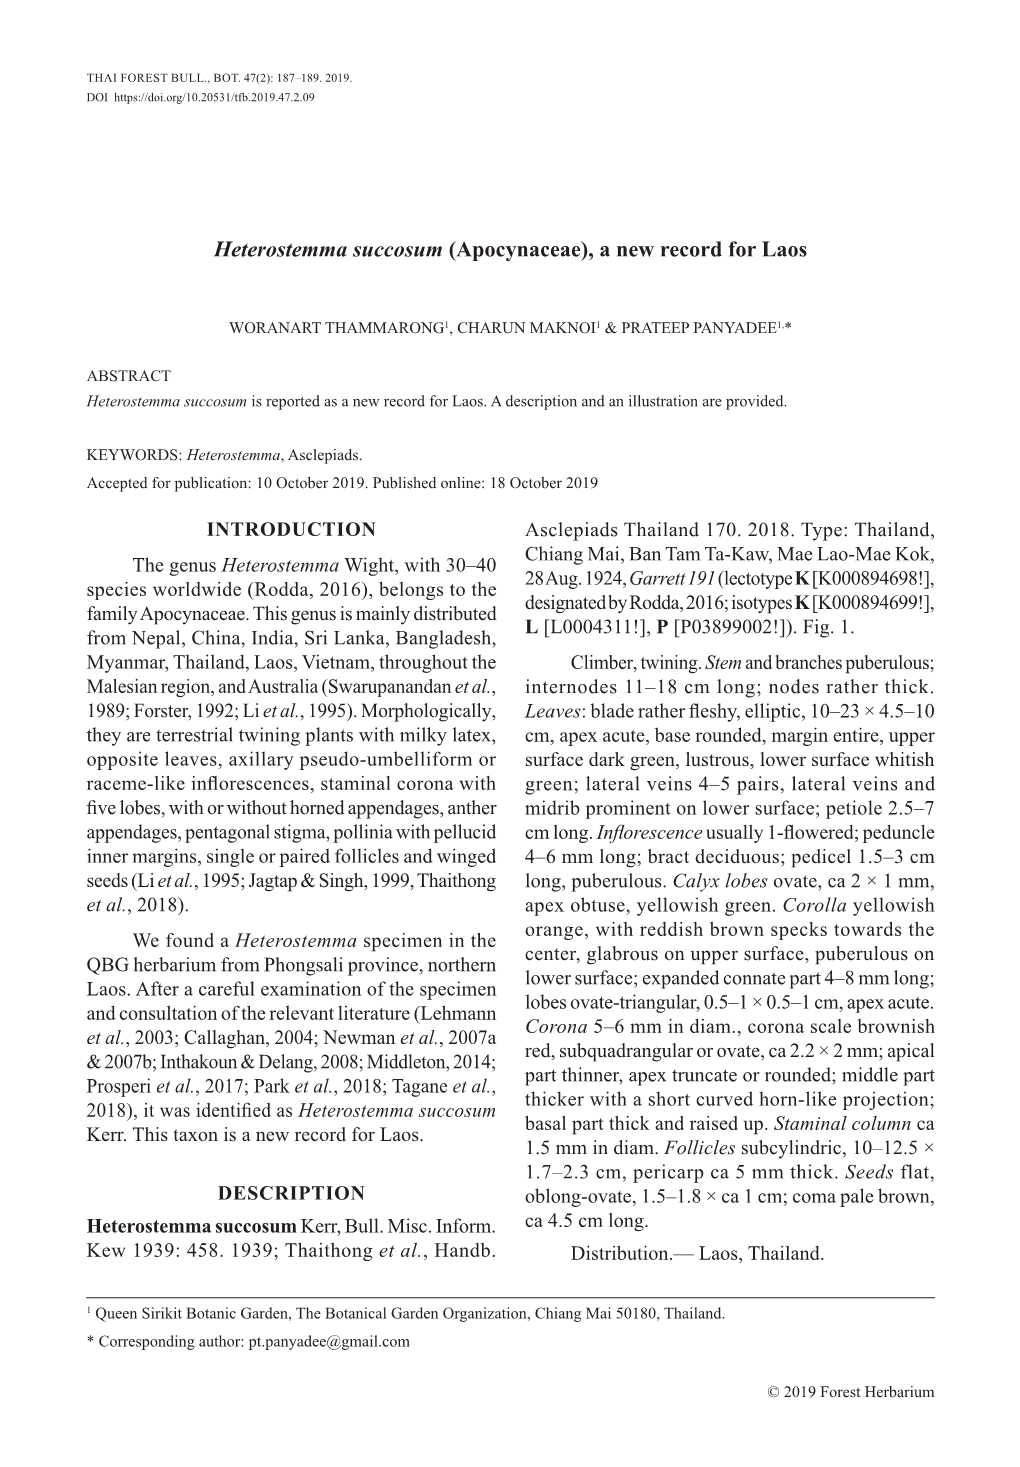 Heterostemma Succosum (Apocynaceae), a New Record for Laos